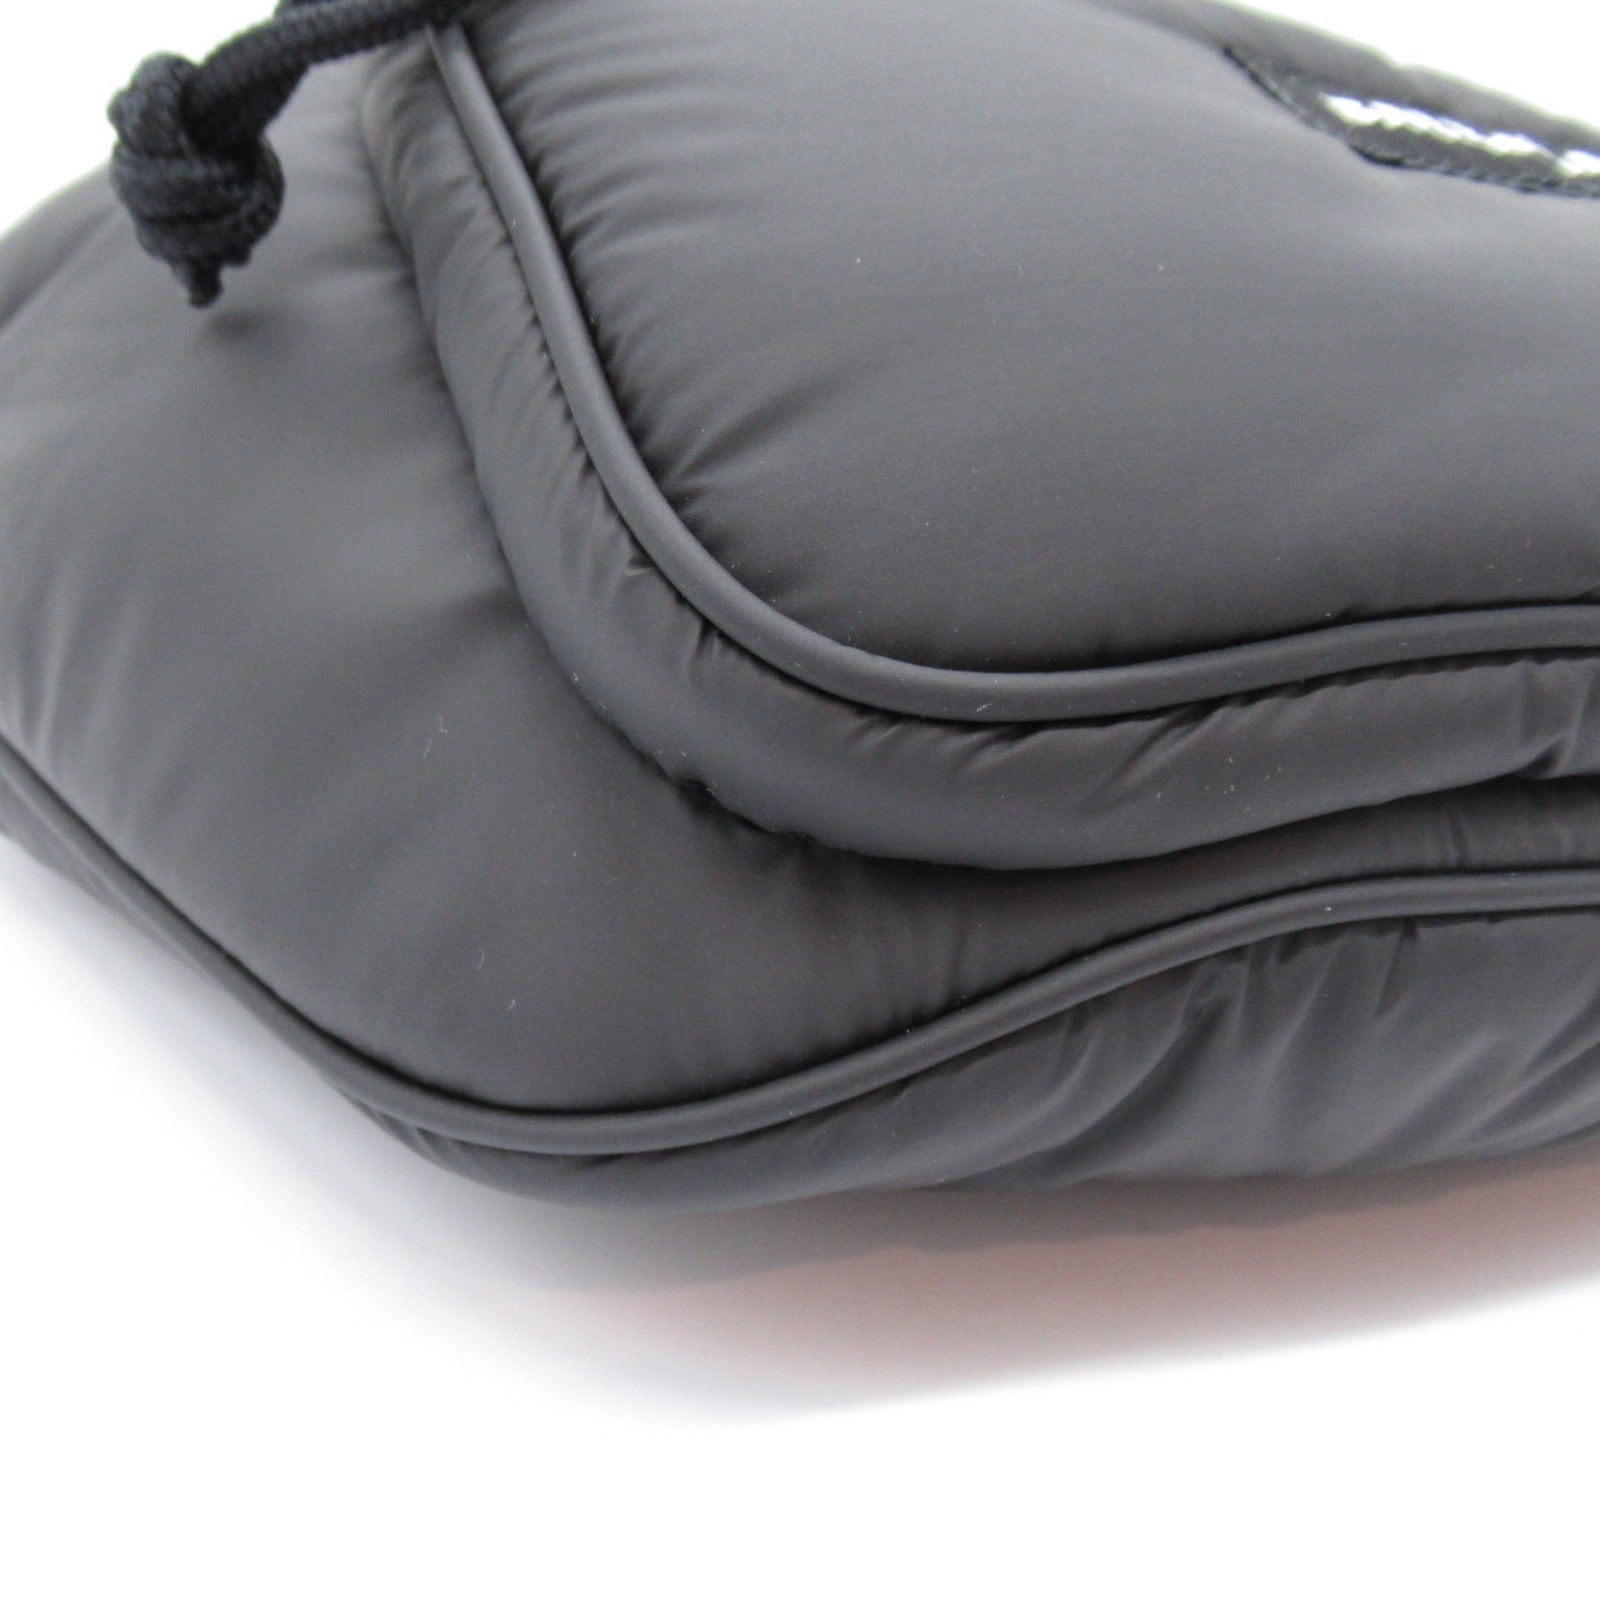 BALENCIAGA Waistern Bag Body Bag Body Bag Body Bag Polyurethane  Black  4823892AAMA1000